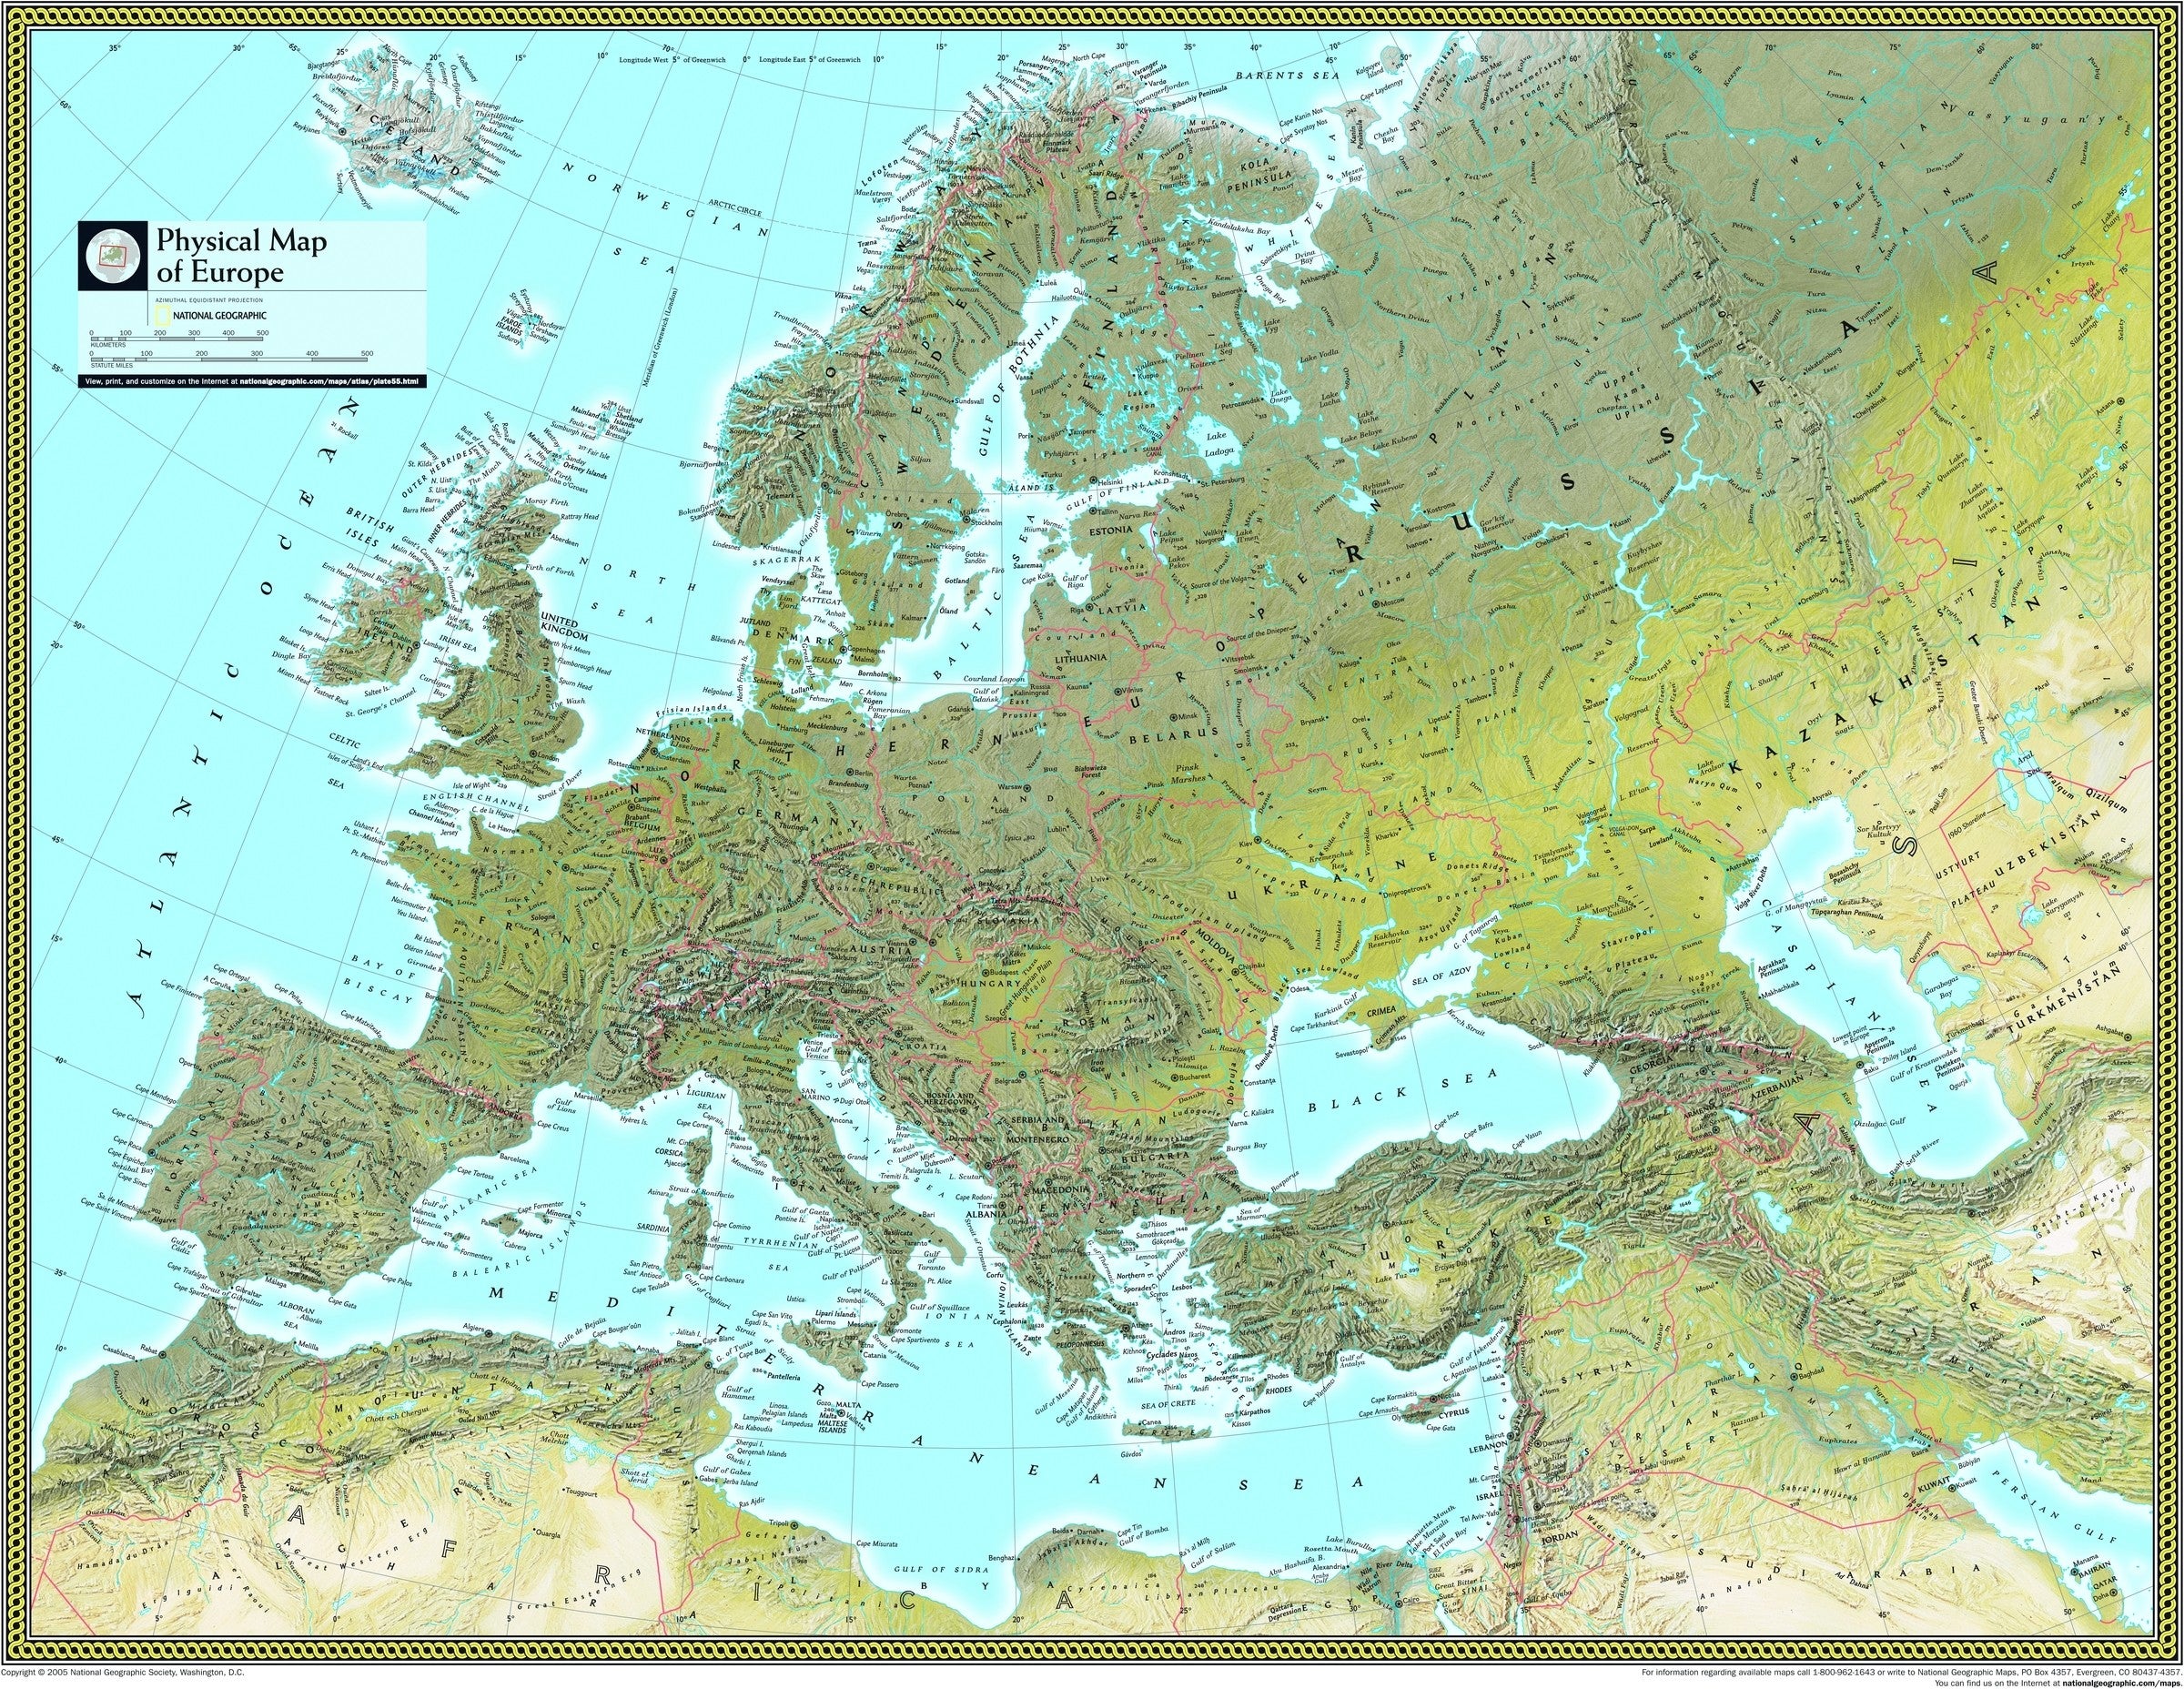  Europe  Physical Atlas Wall Map  Maps com